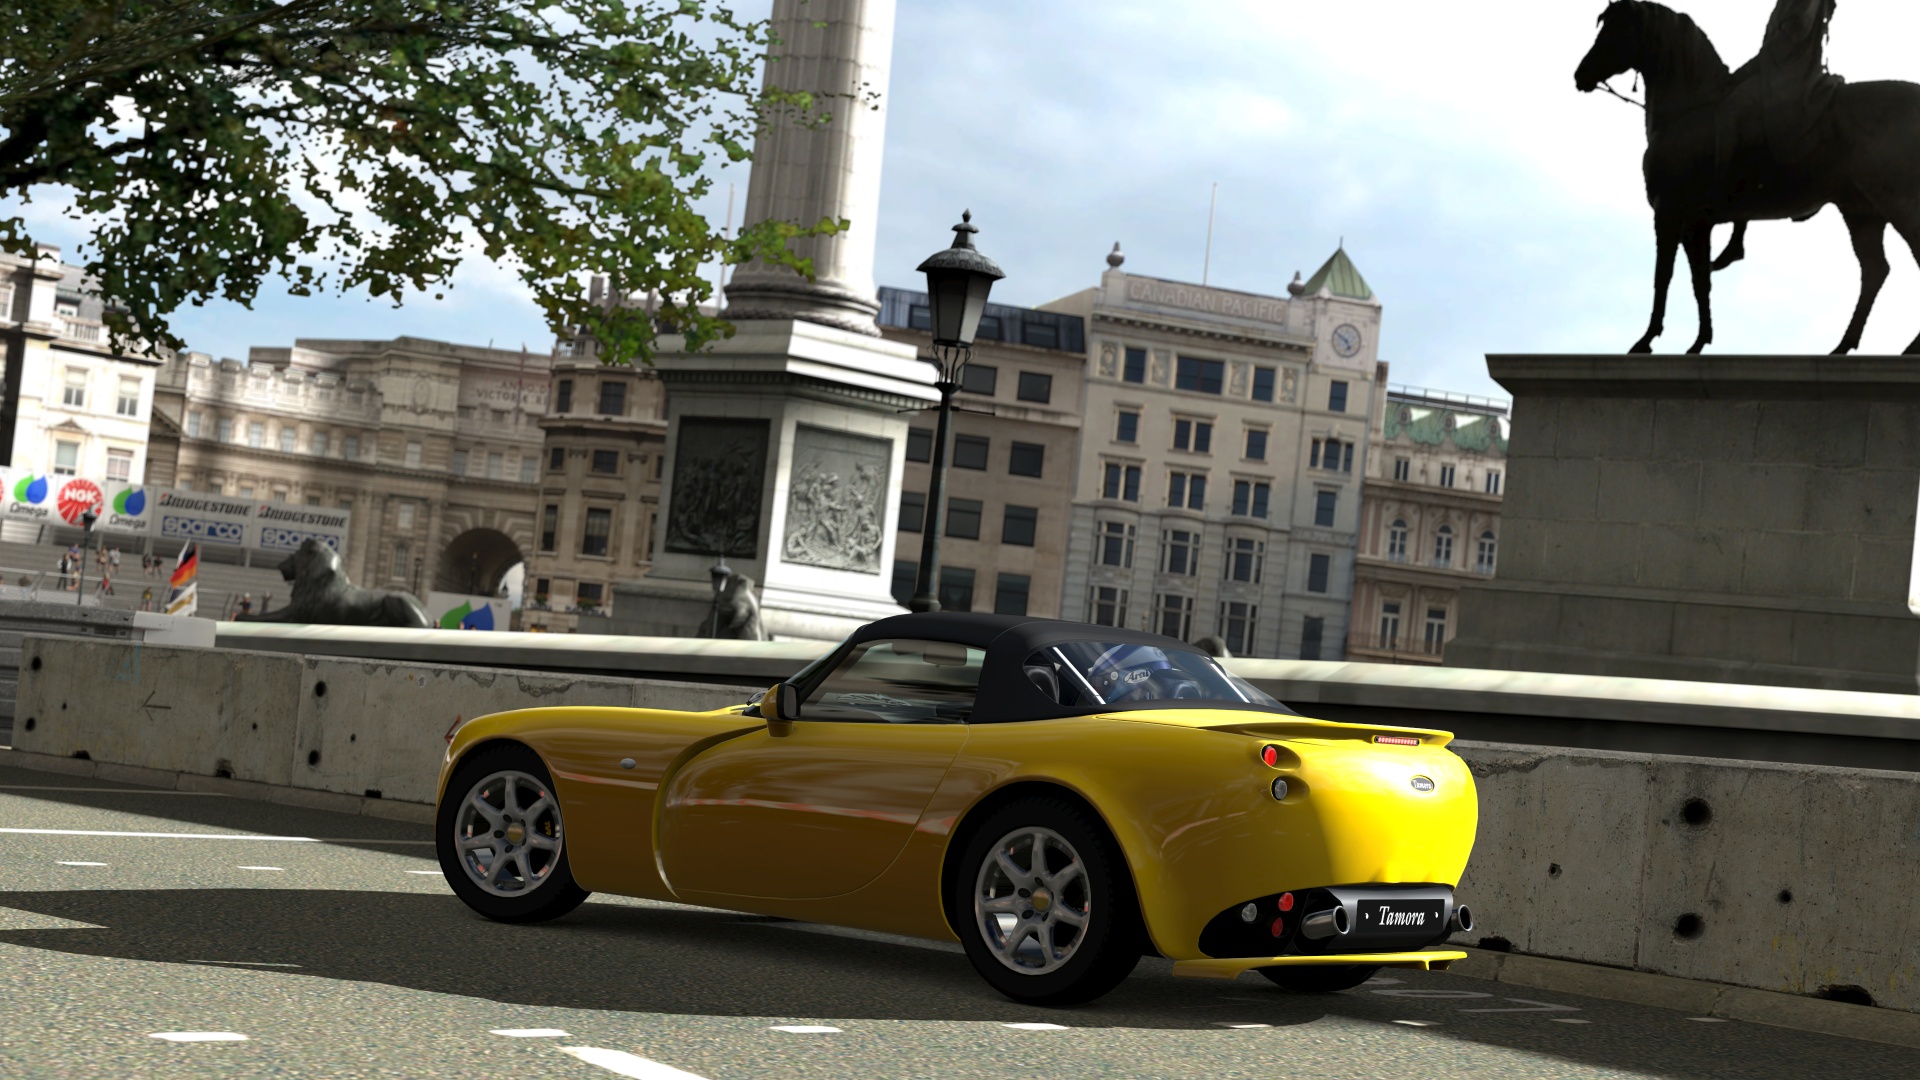 Gran Turismo 5 Prologue Gameplay (Playstation 3) 